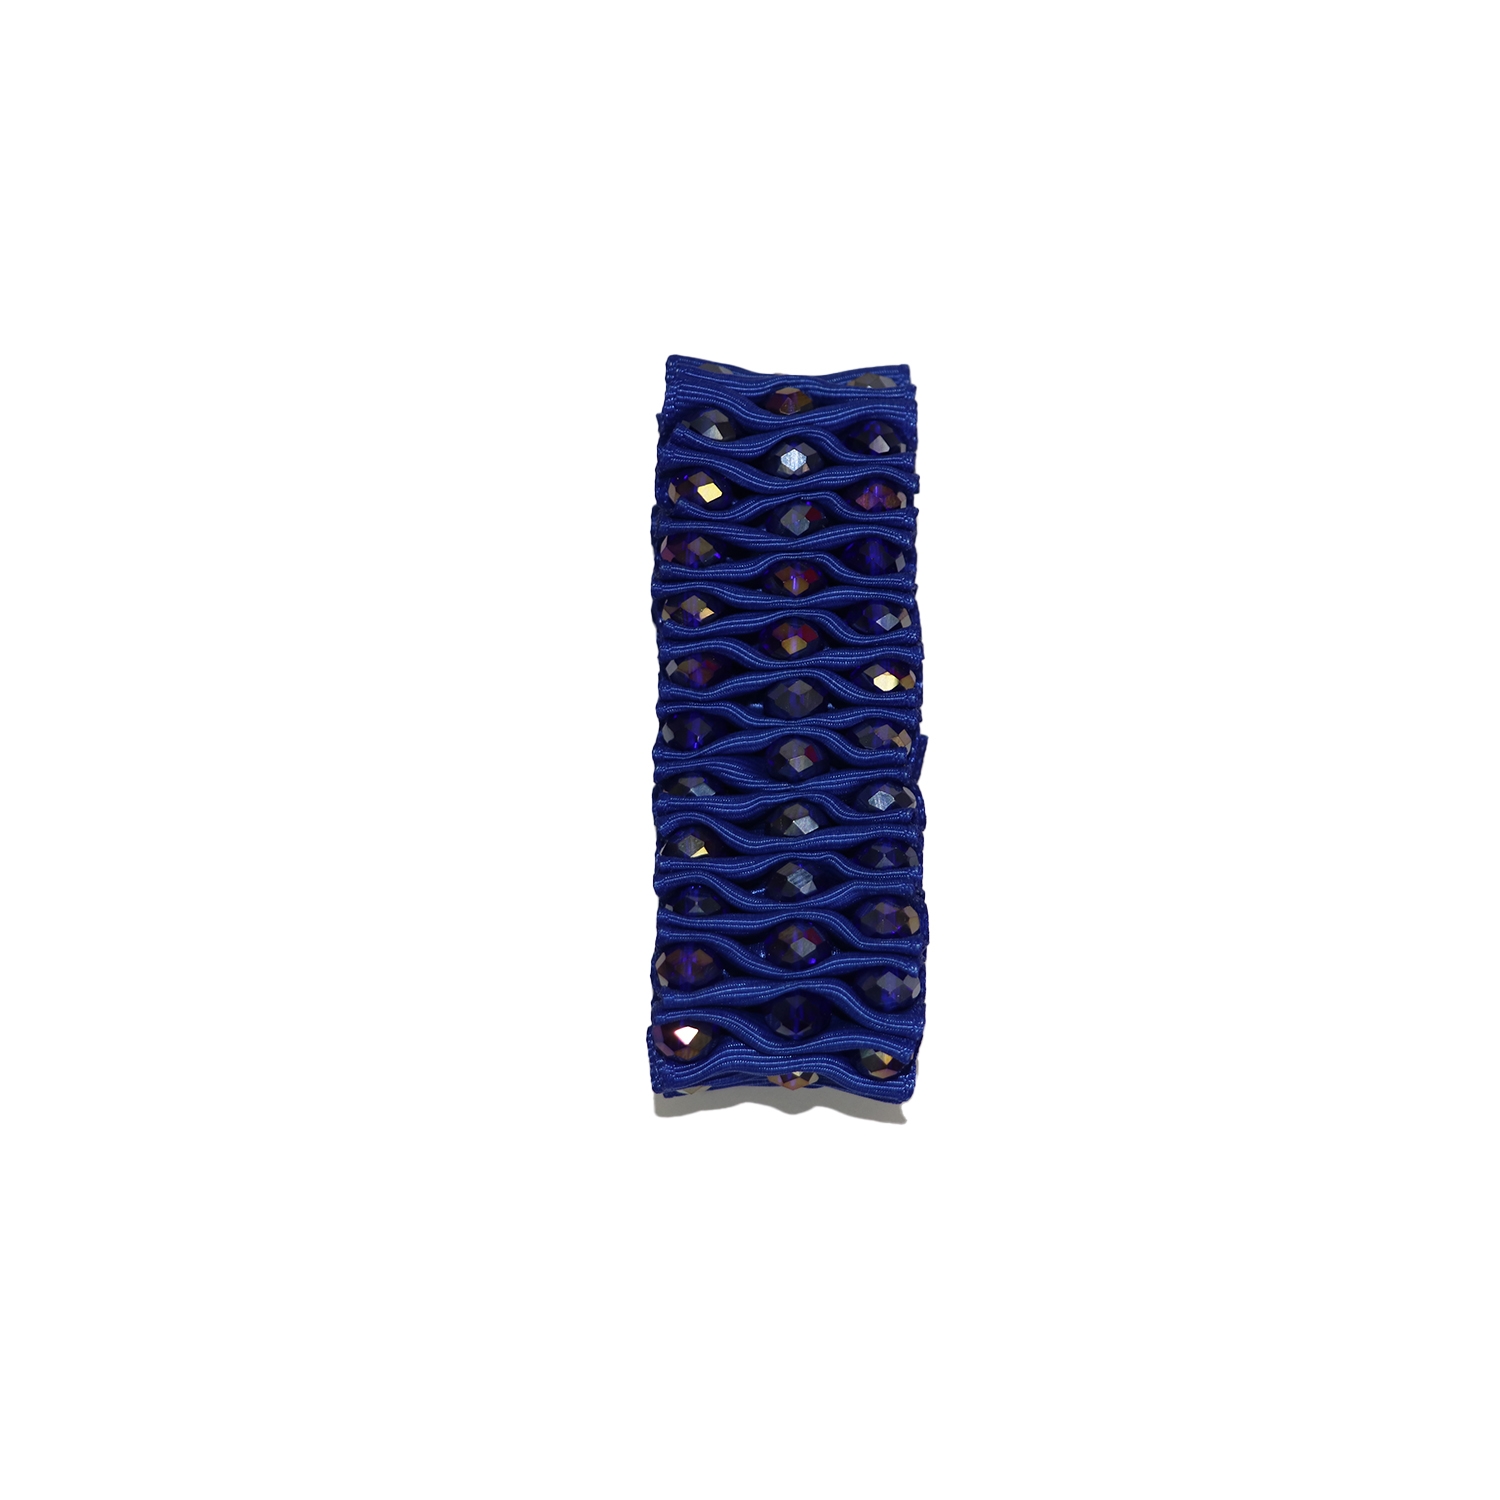 EMM | EMM's stylish adjustable blue bracelet for girls